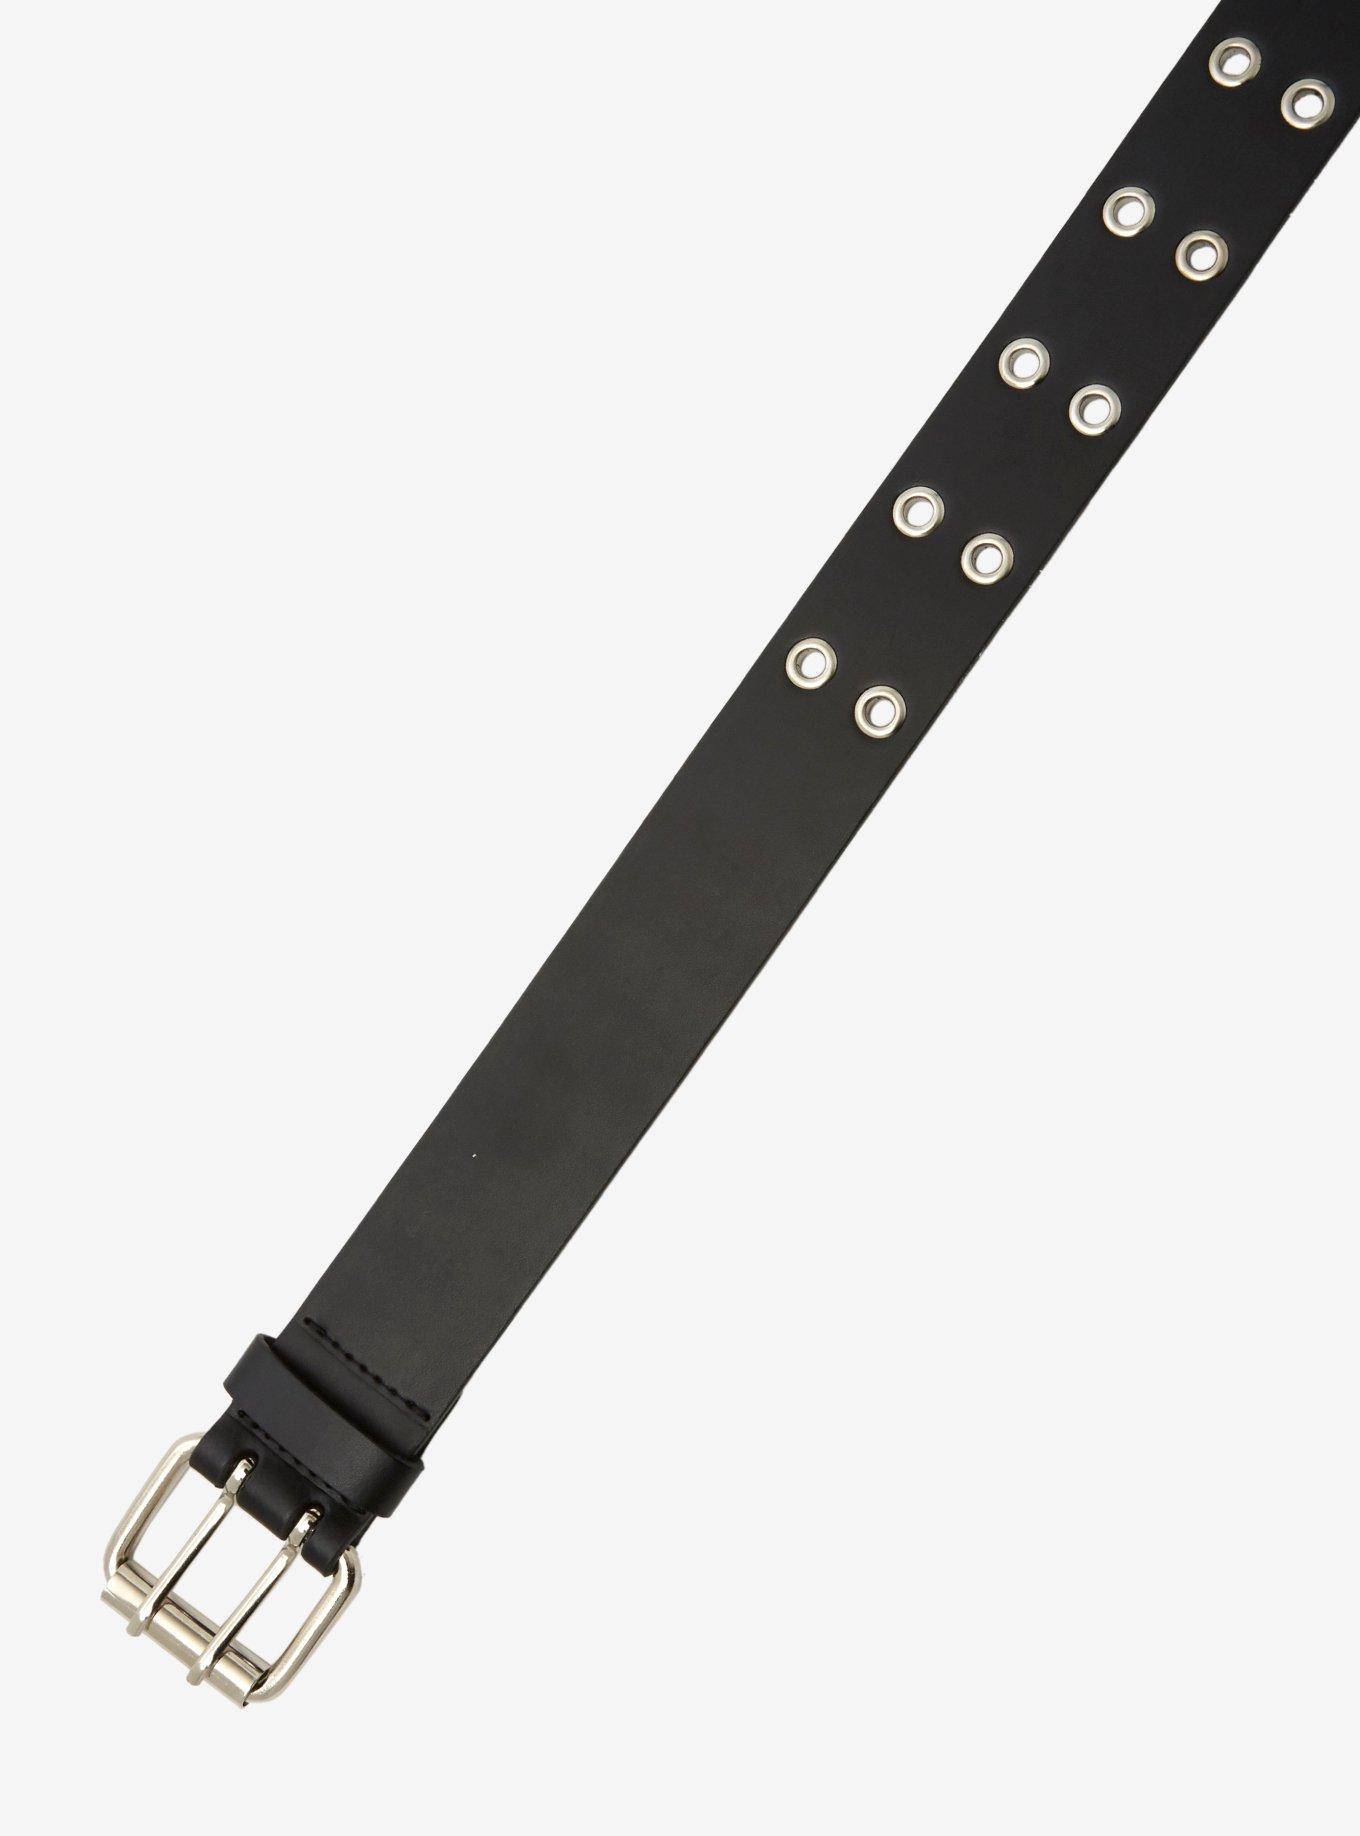 Grommet Studded Belt | Made in USA | by Sole Survivor Leather Black / 54